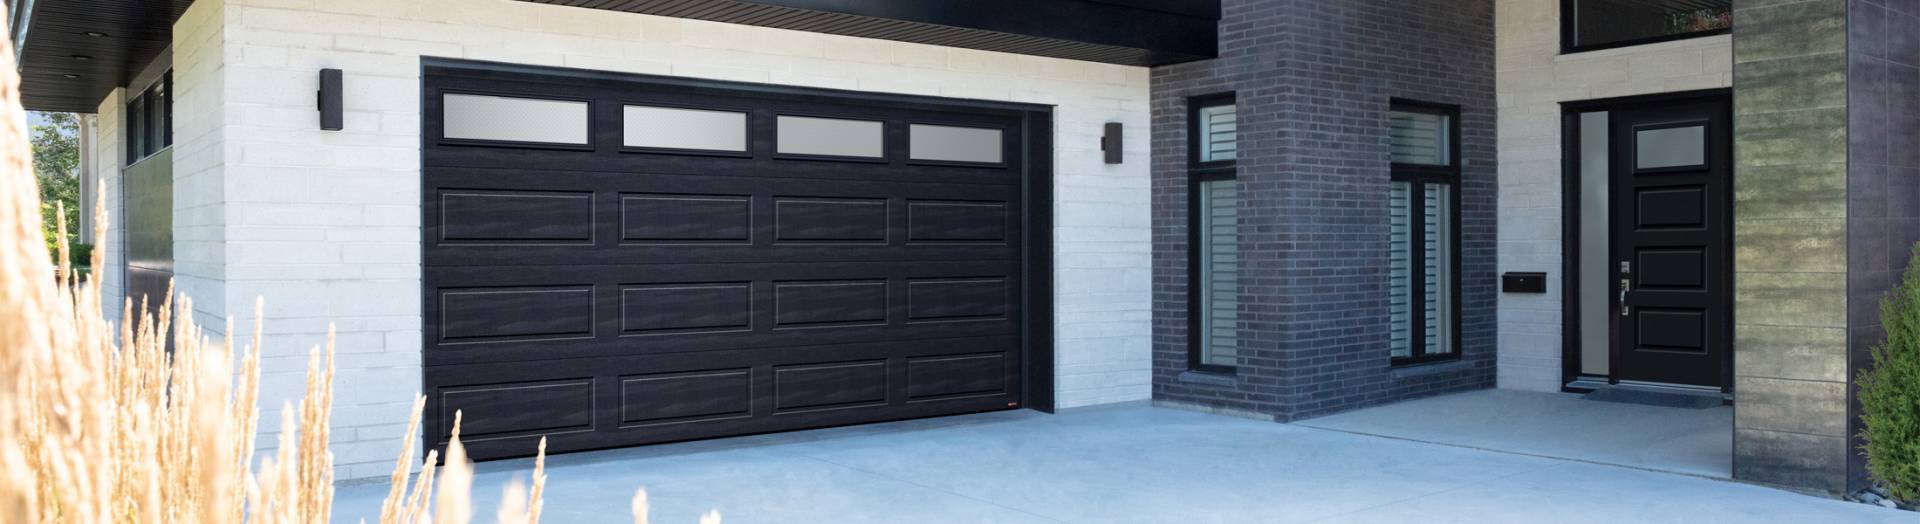 Contemporary style house with a Shaker-Modern XL garage door, Garaga’s latest design, in Black